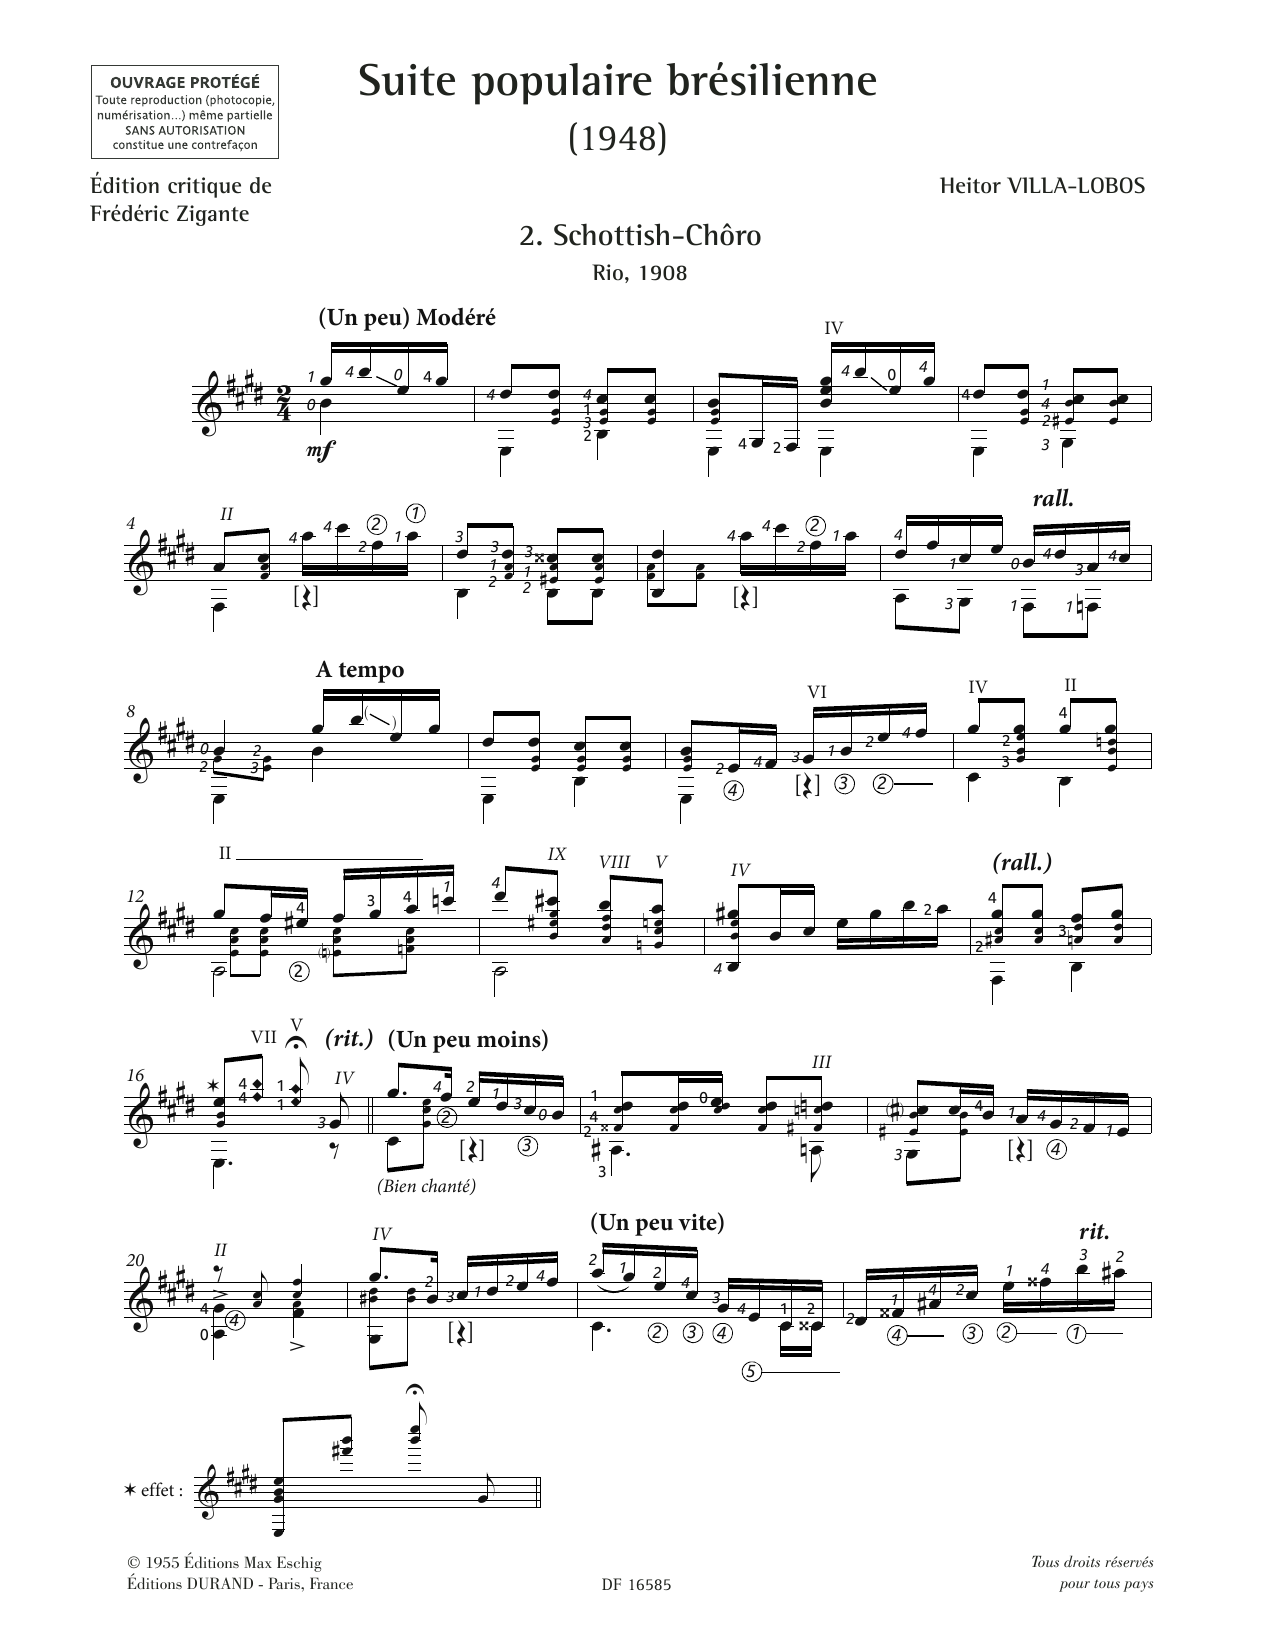 Heitor Villa-Lobos Schottish-Choro Sheet Music Notes & Chords for Solo Guitar - Download or Print PDF